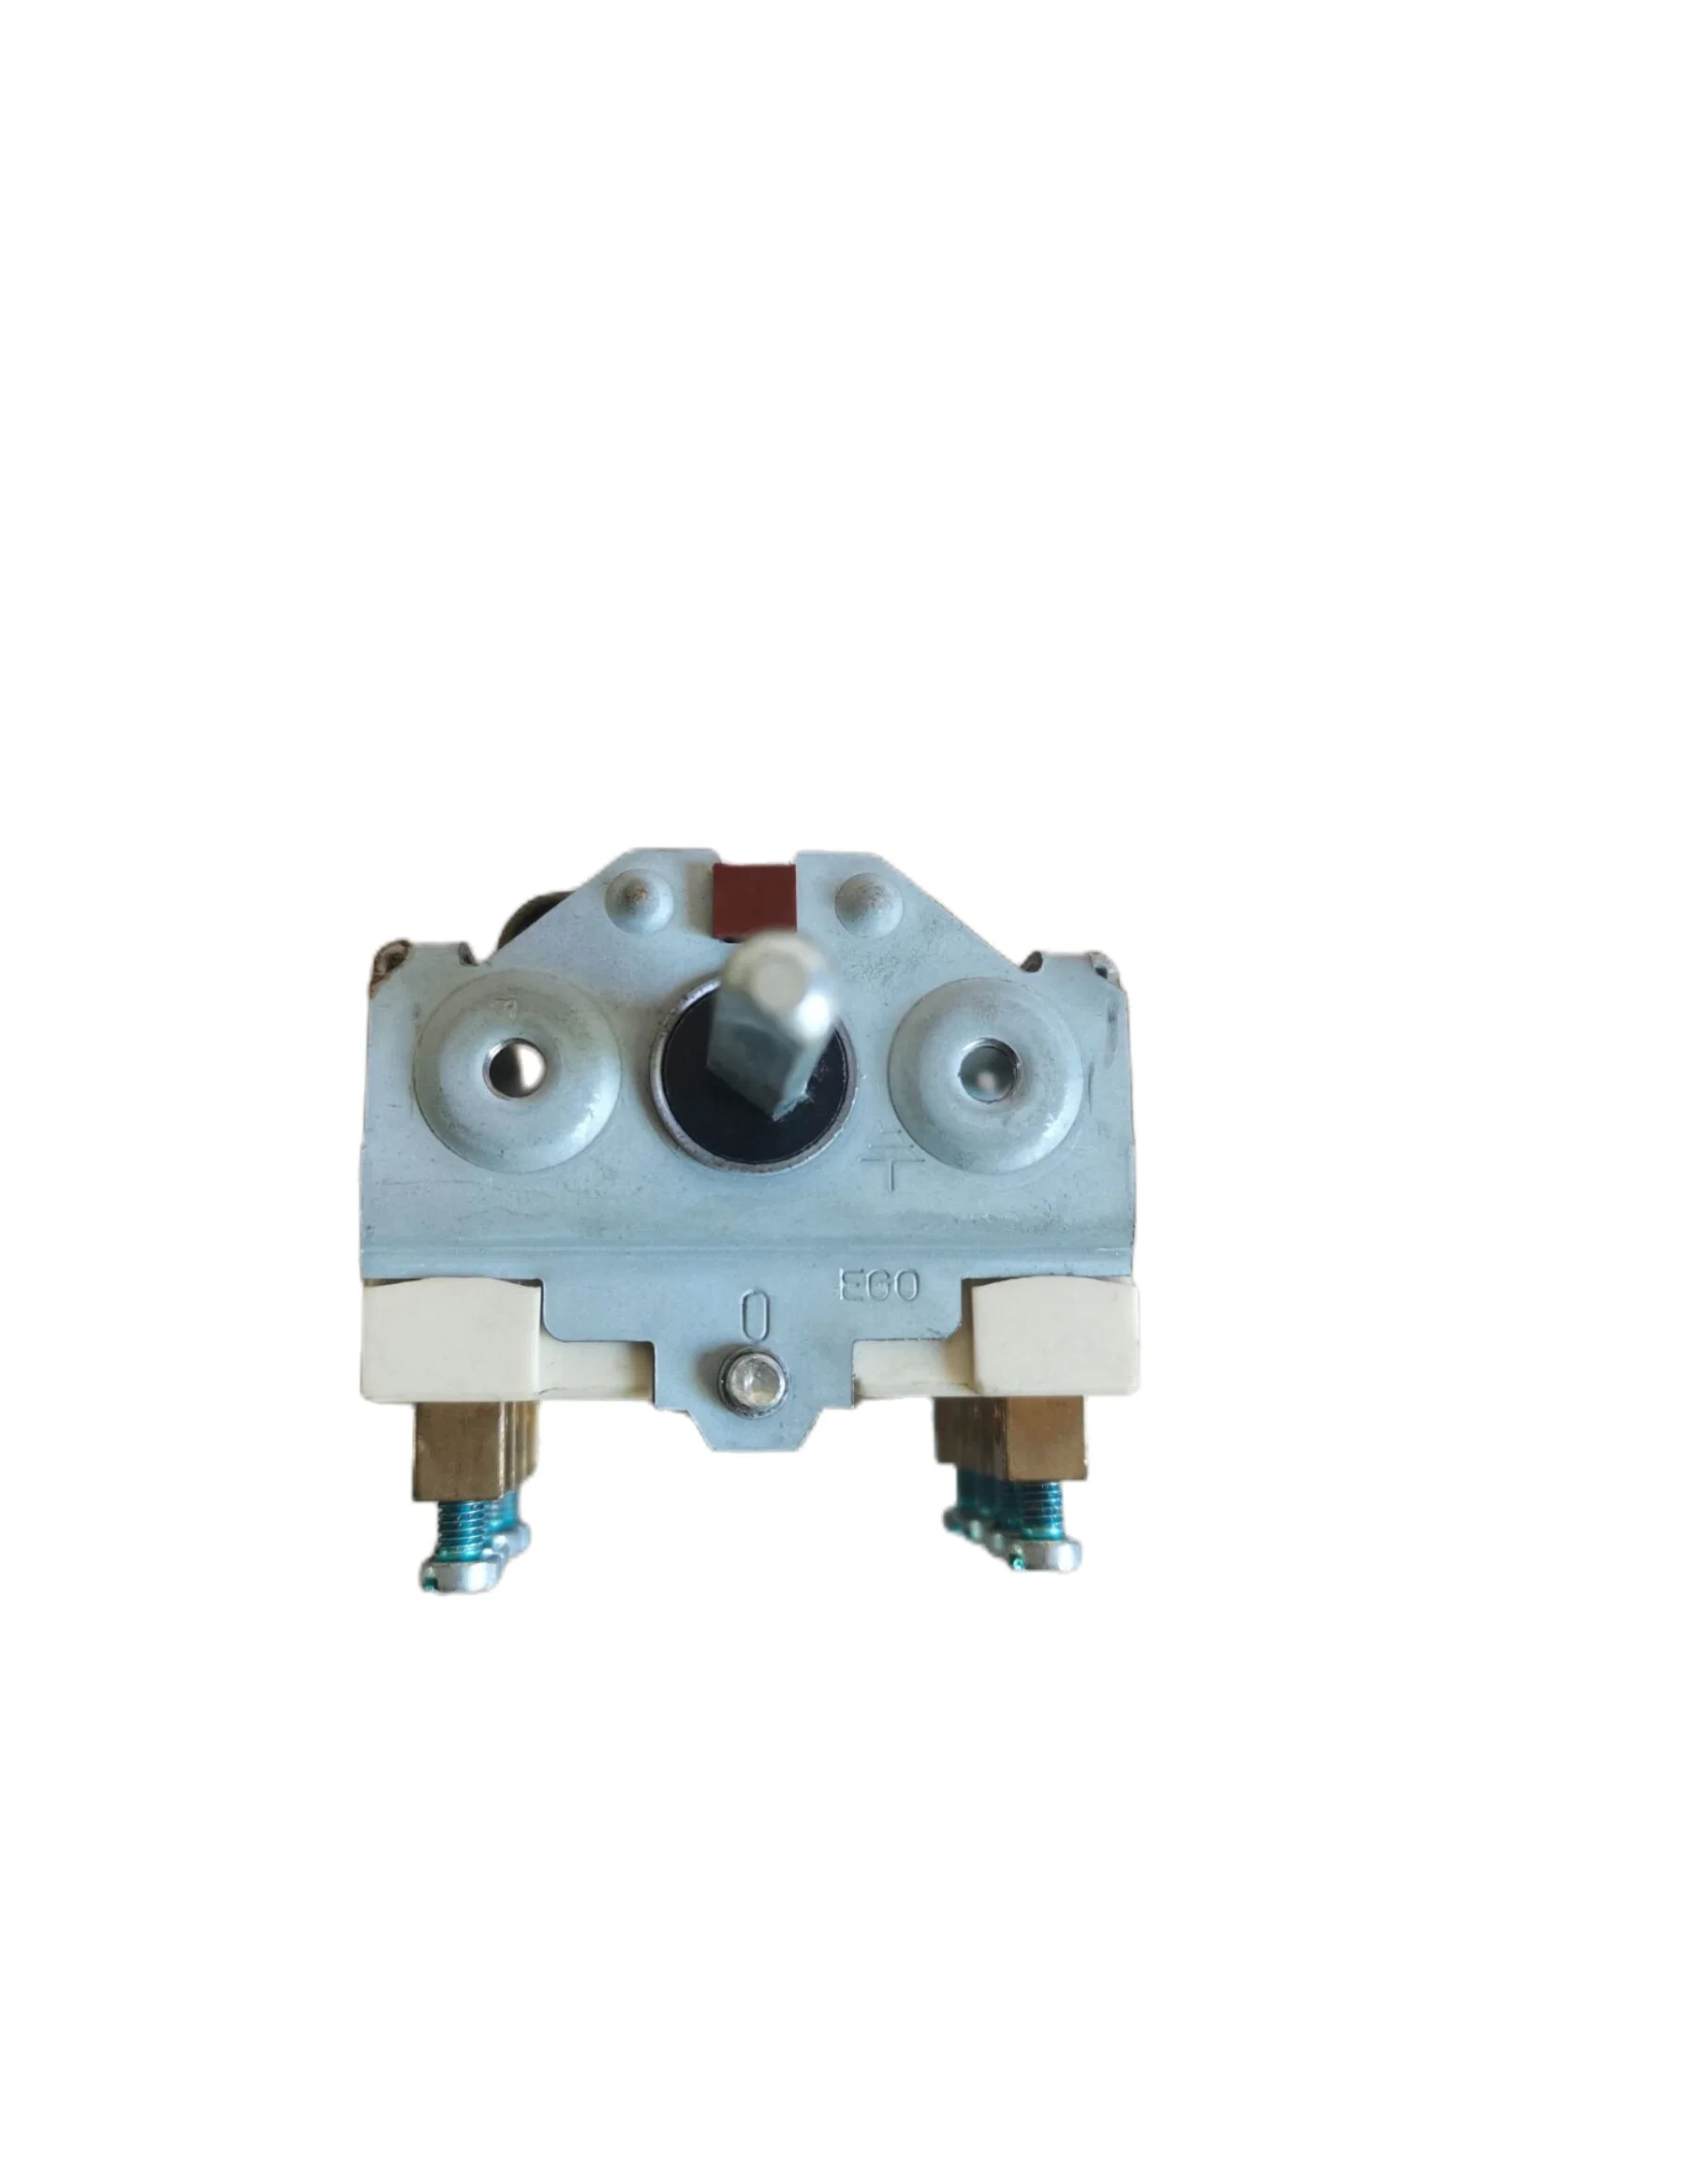 Interruptor giratorio de cambio cerámico serie Fd02 para estufa de gas eléctrica